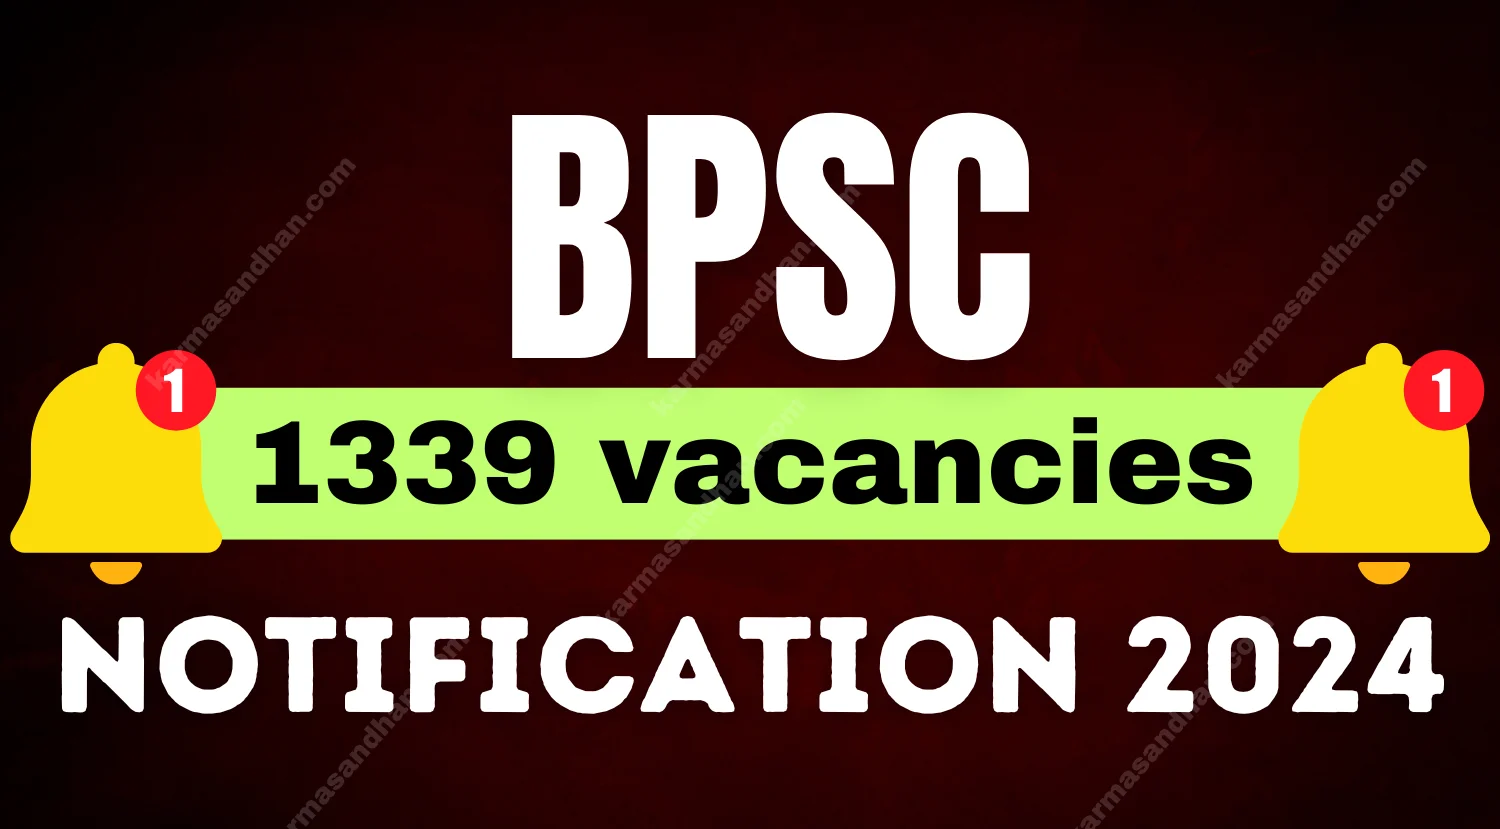 BPSC 1339 Assistant Professor Recruitment 2024 Notification Out